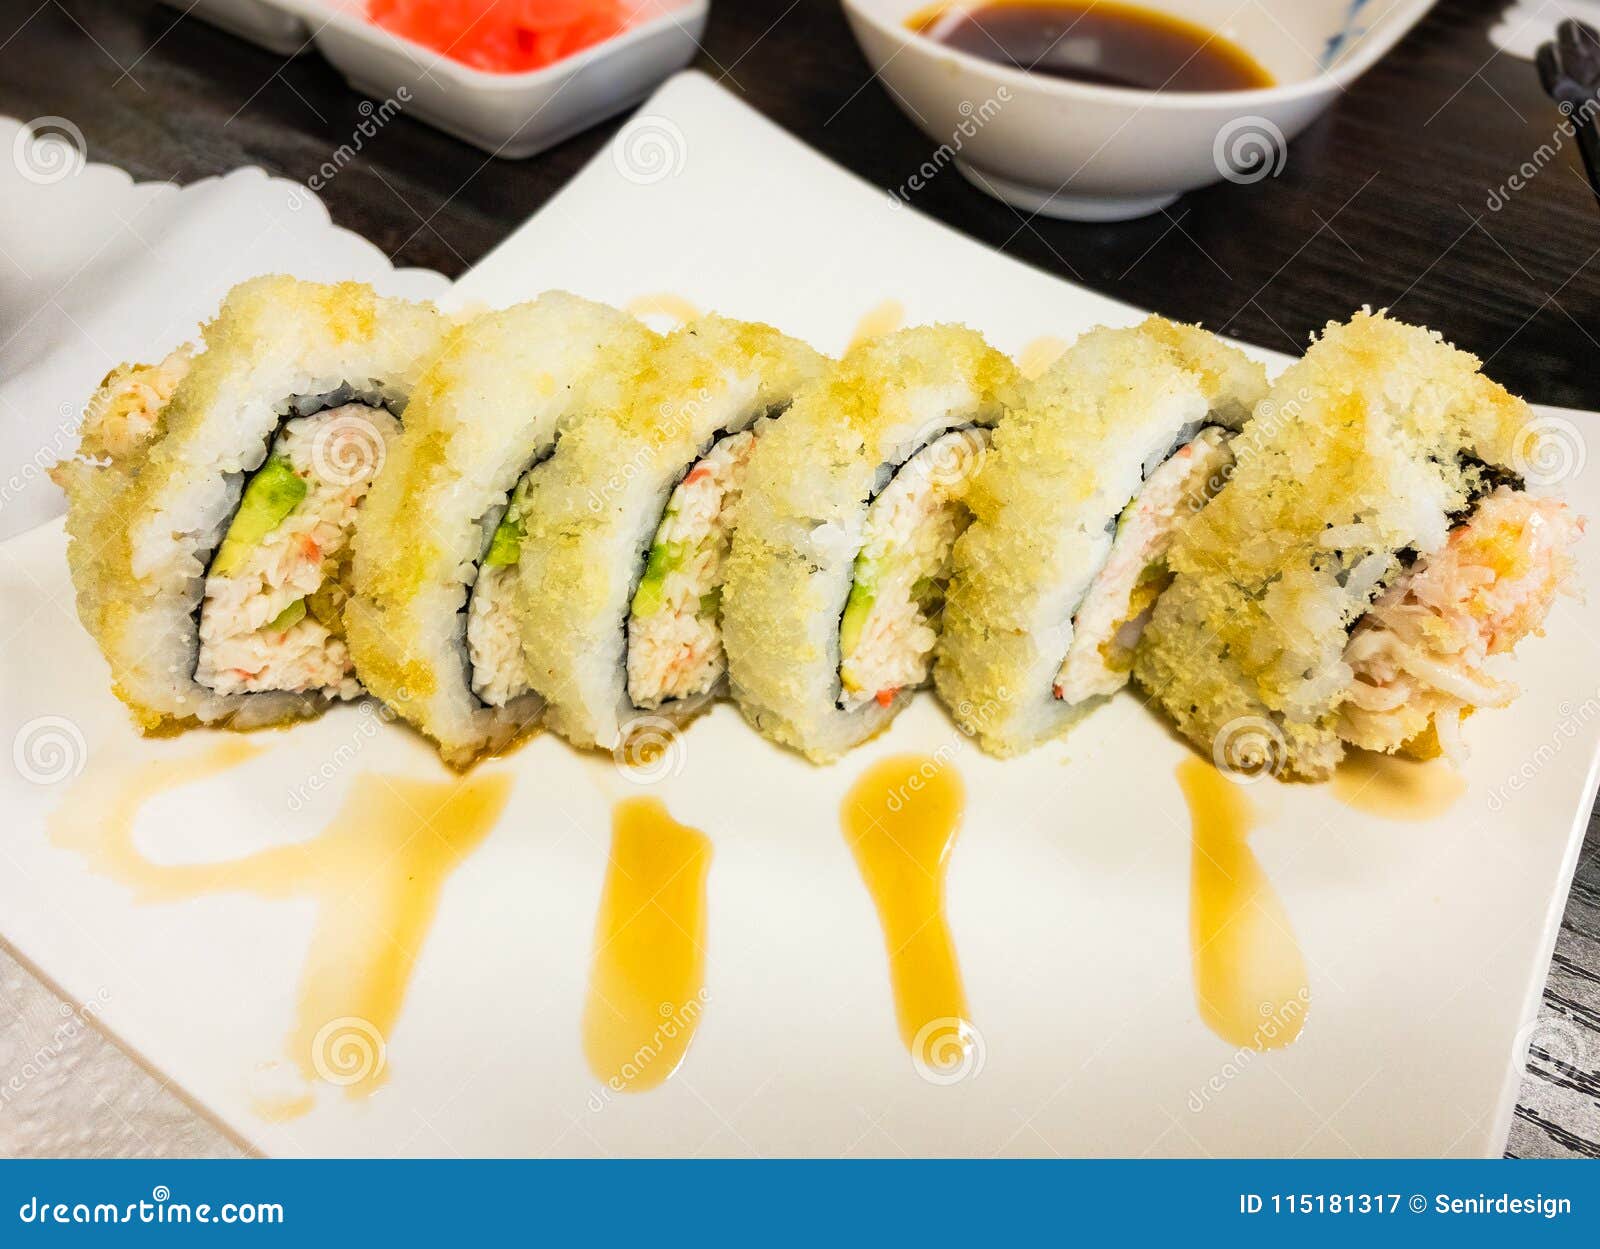 nutrition facts for shrimp tempura roll sushi 1piece